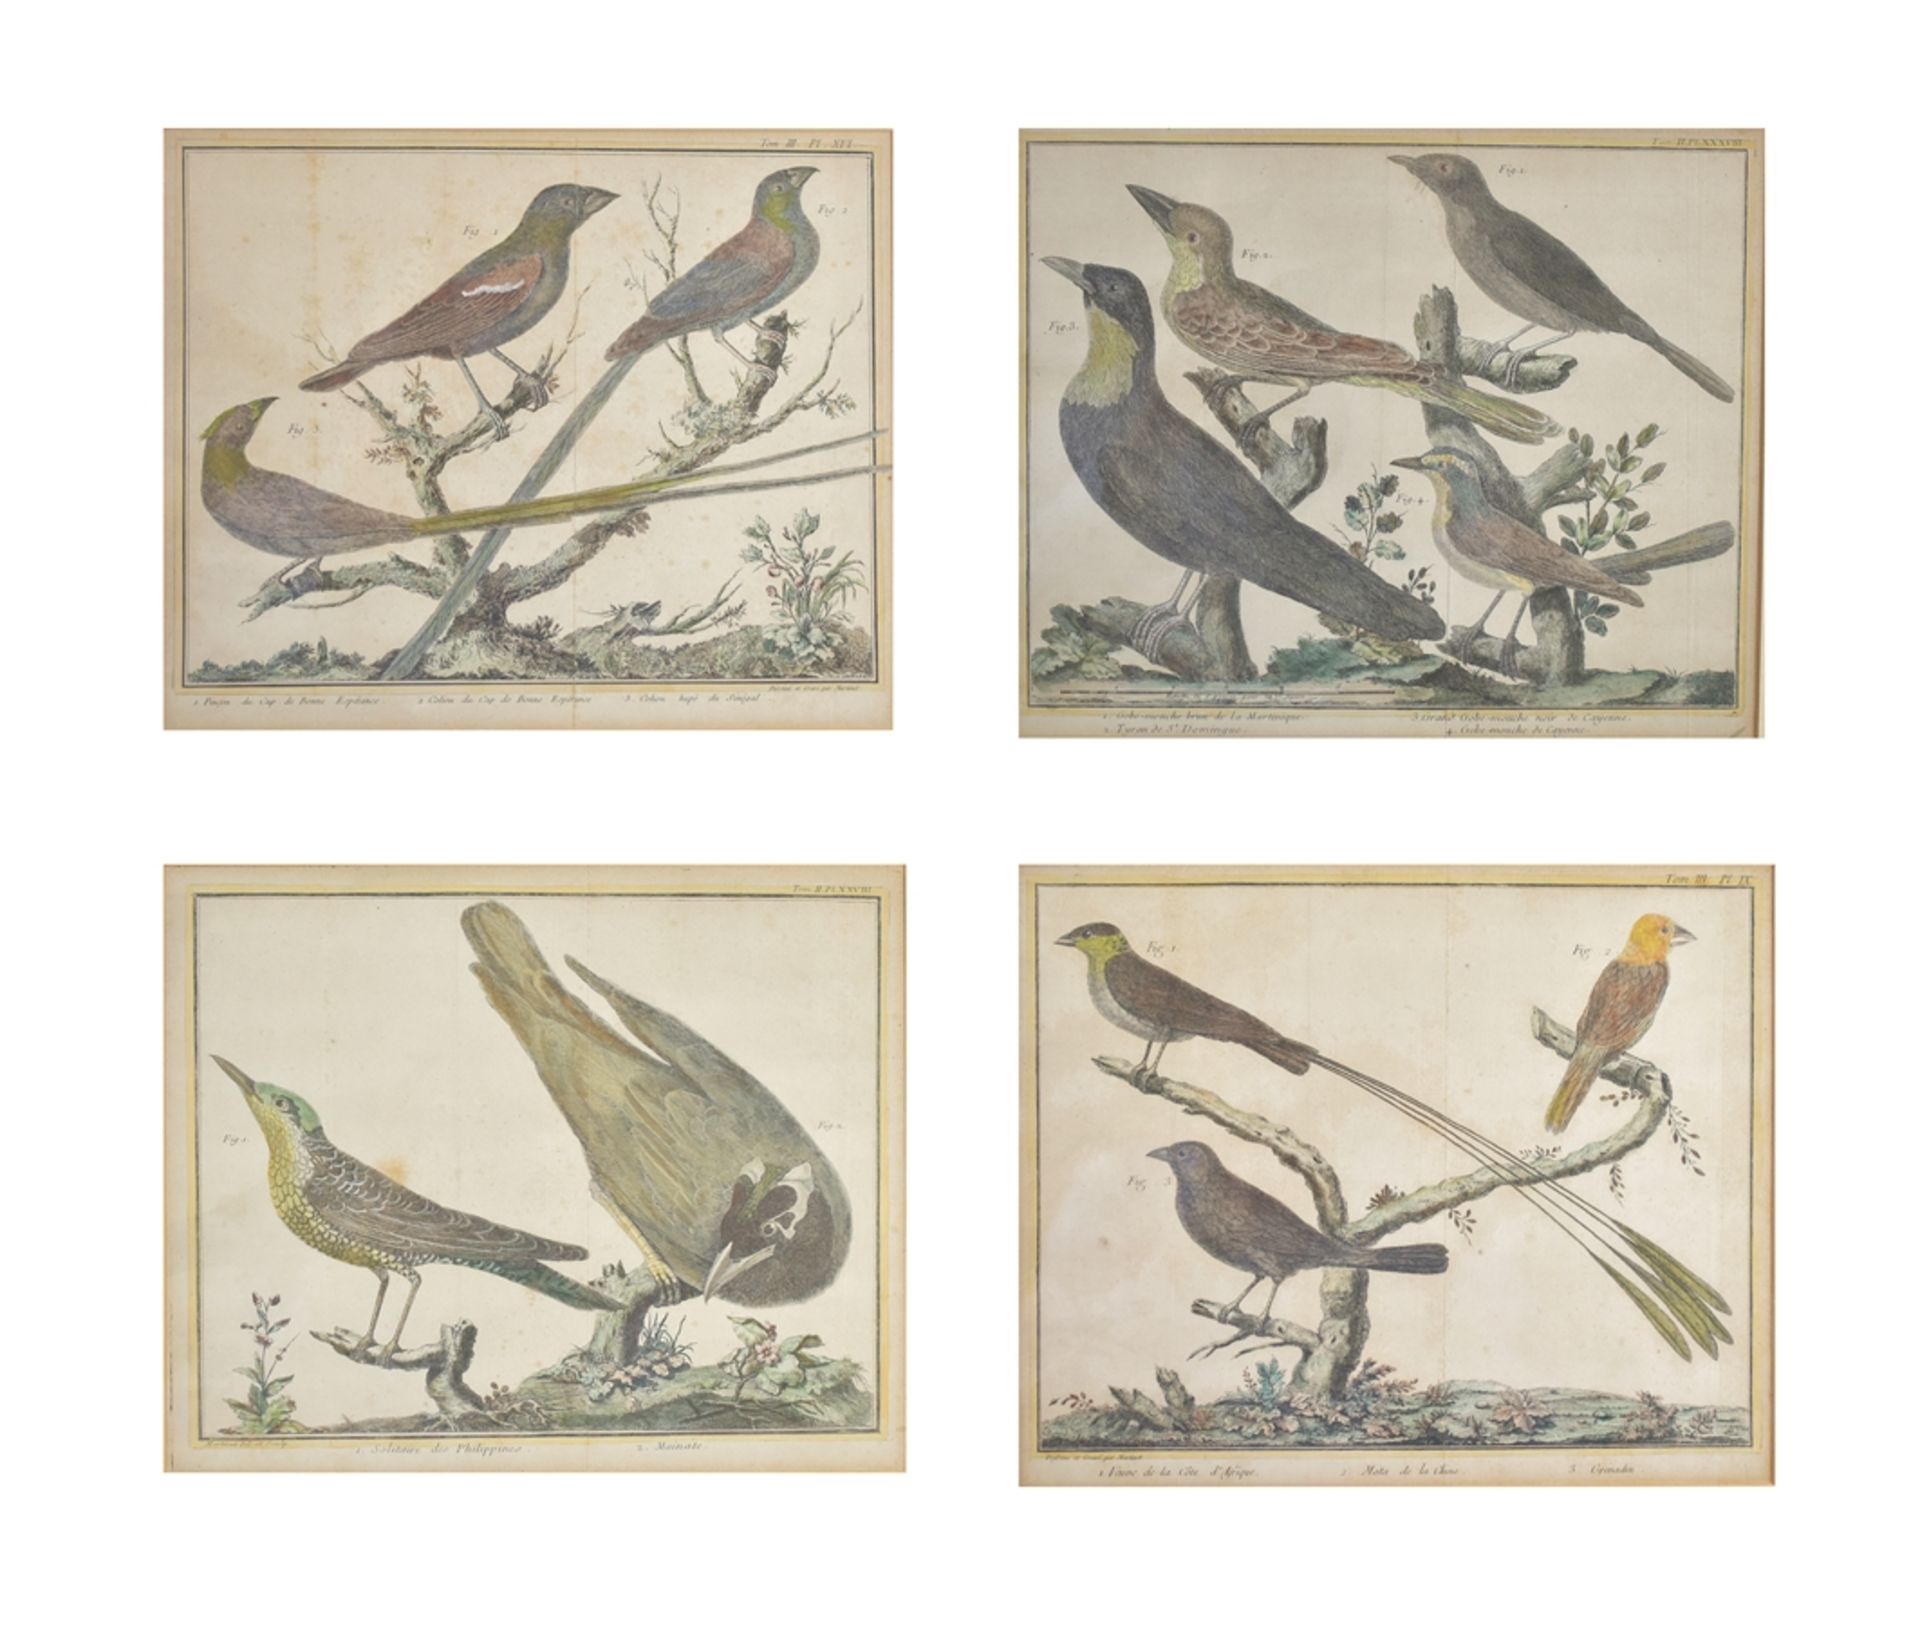 Vögel. 4 kol. Kupferstiche von Francois-Nicolas Martinet aus 'Histoire Naturelle des Oiseaux' 1785.